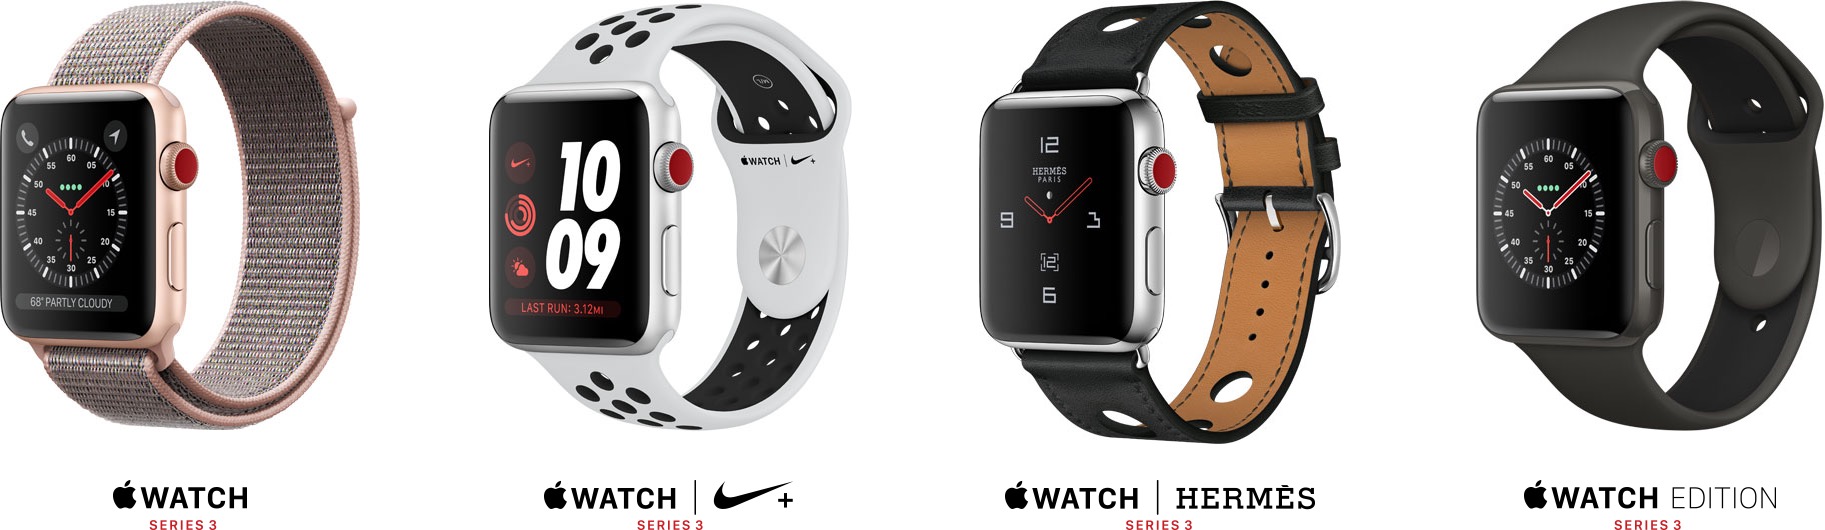 طرازات Apple Watch Series 3 (GPS + Cellular)